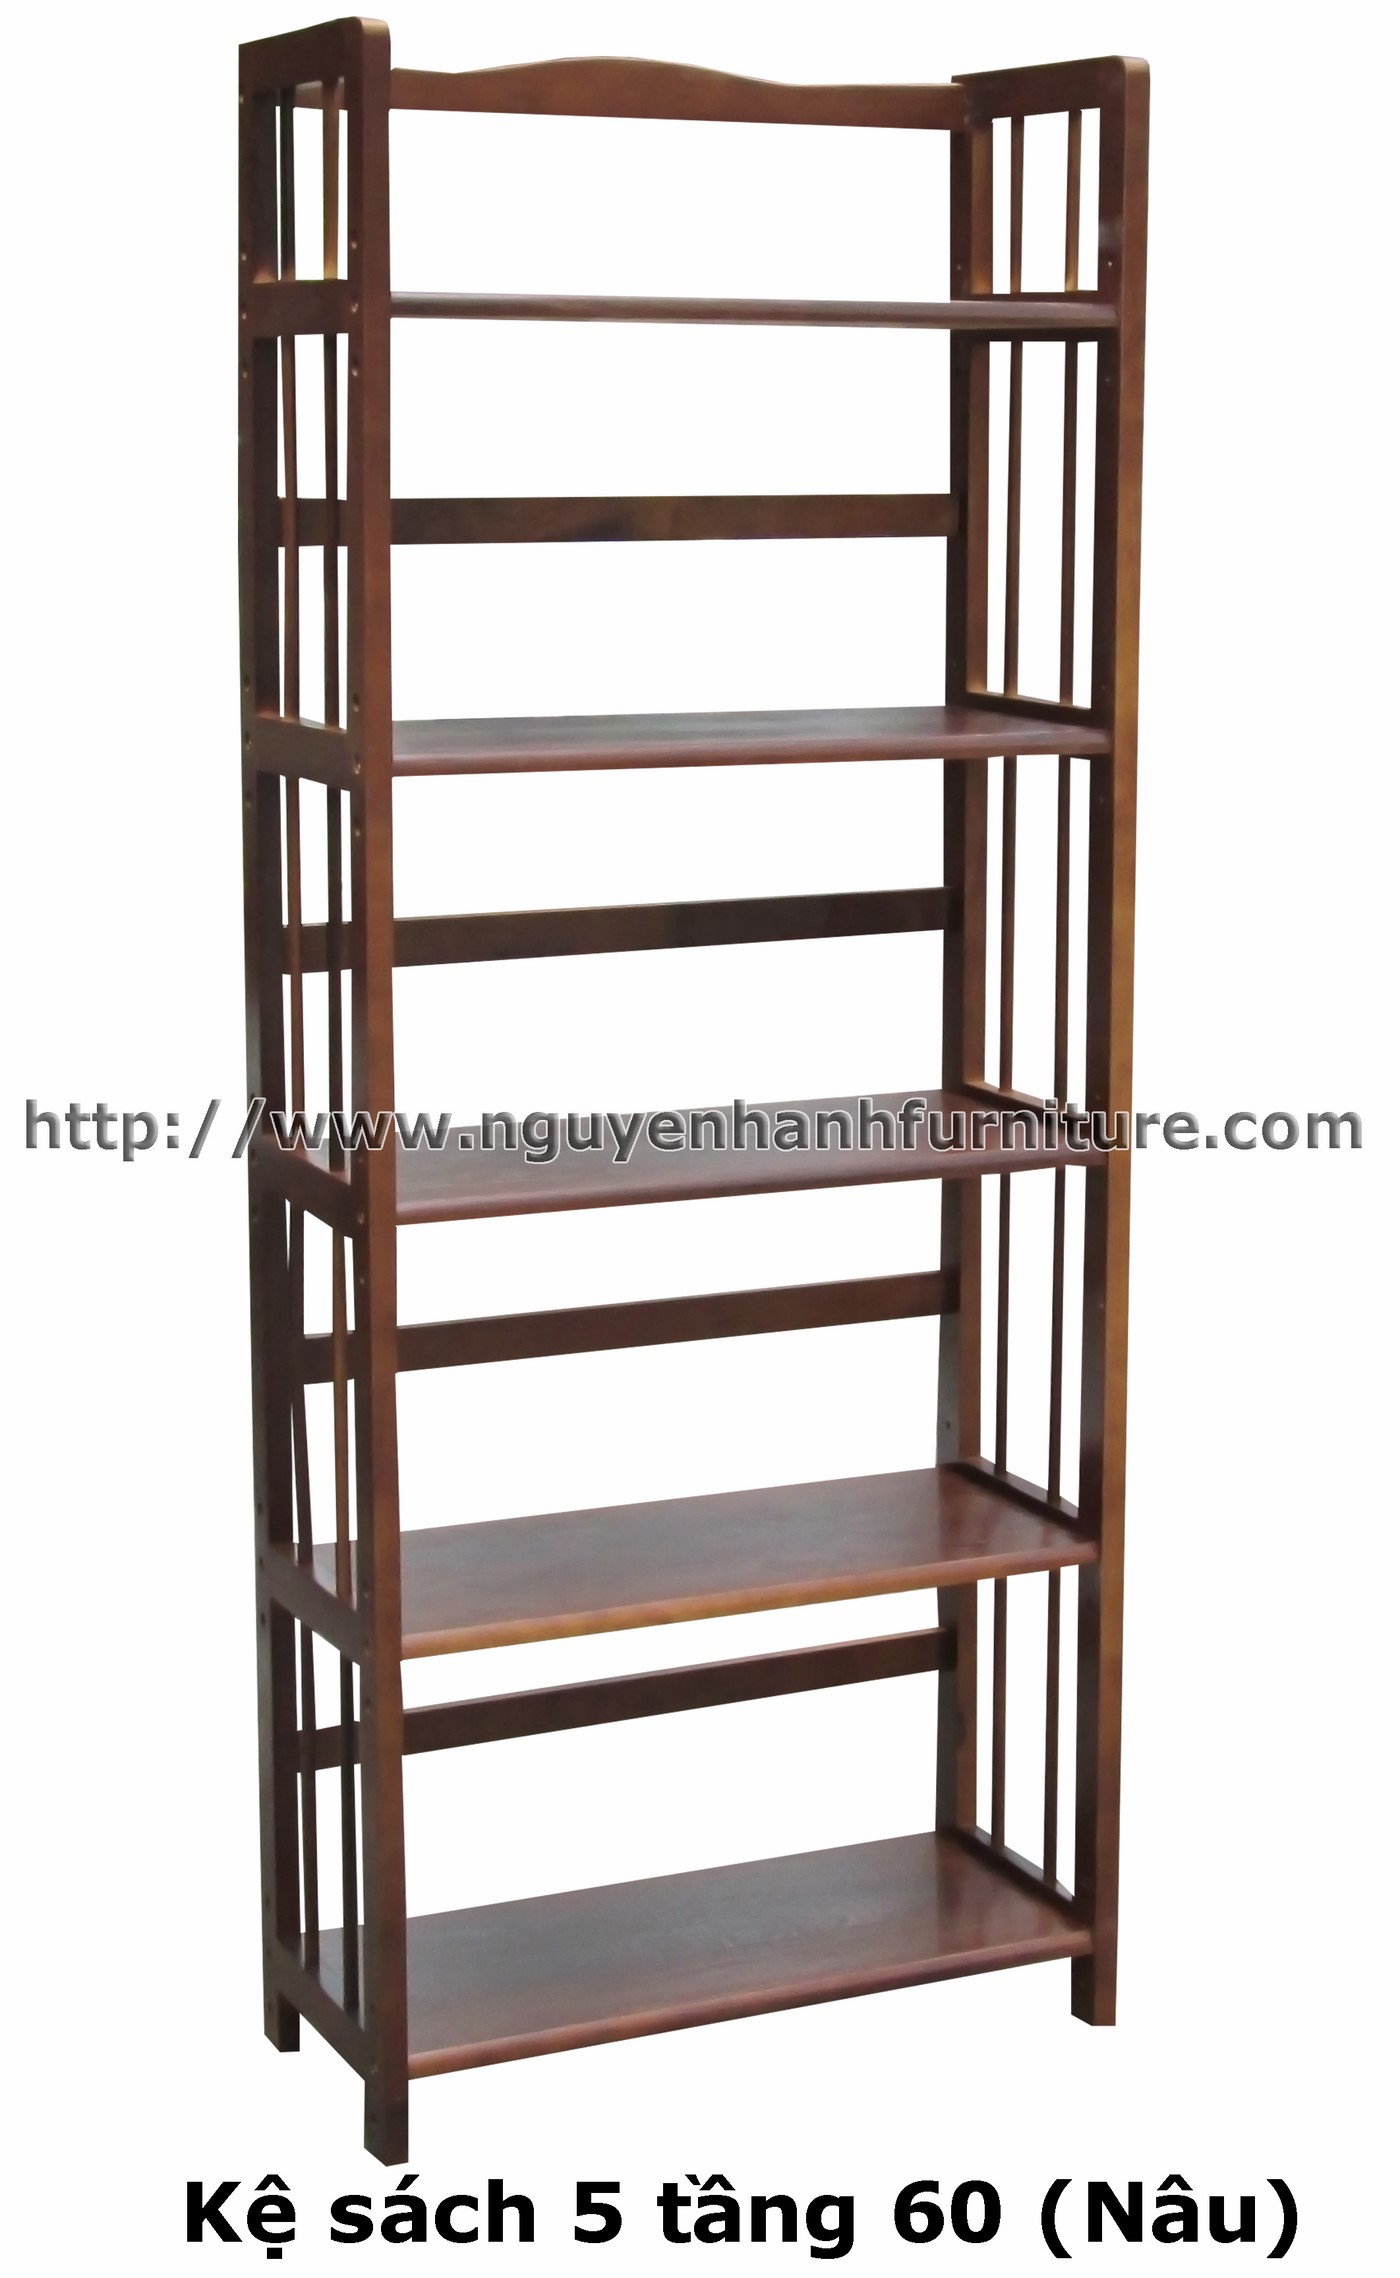 Name product: 5 storey Adjustable Bookshelf 60 (brown) - Dimensions: 63 x 28 x 157 (H) - Description: Wood natural rubber